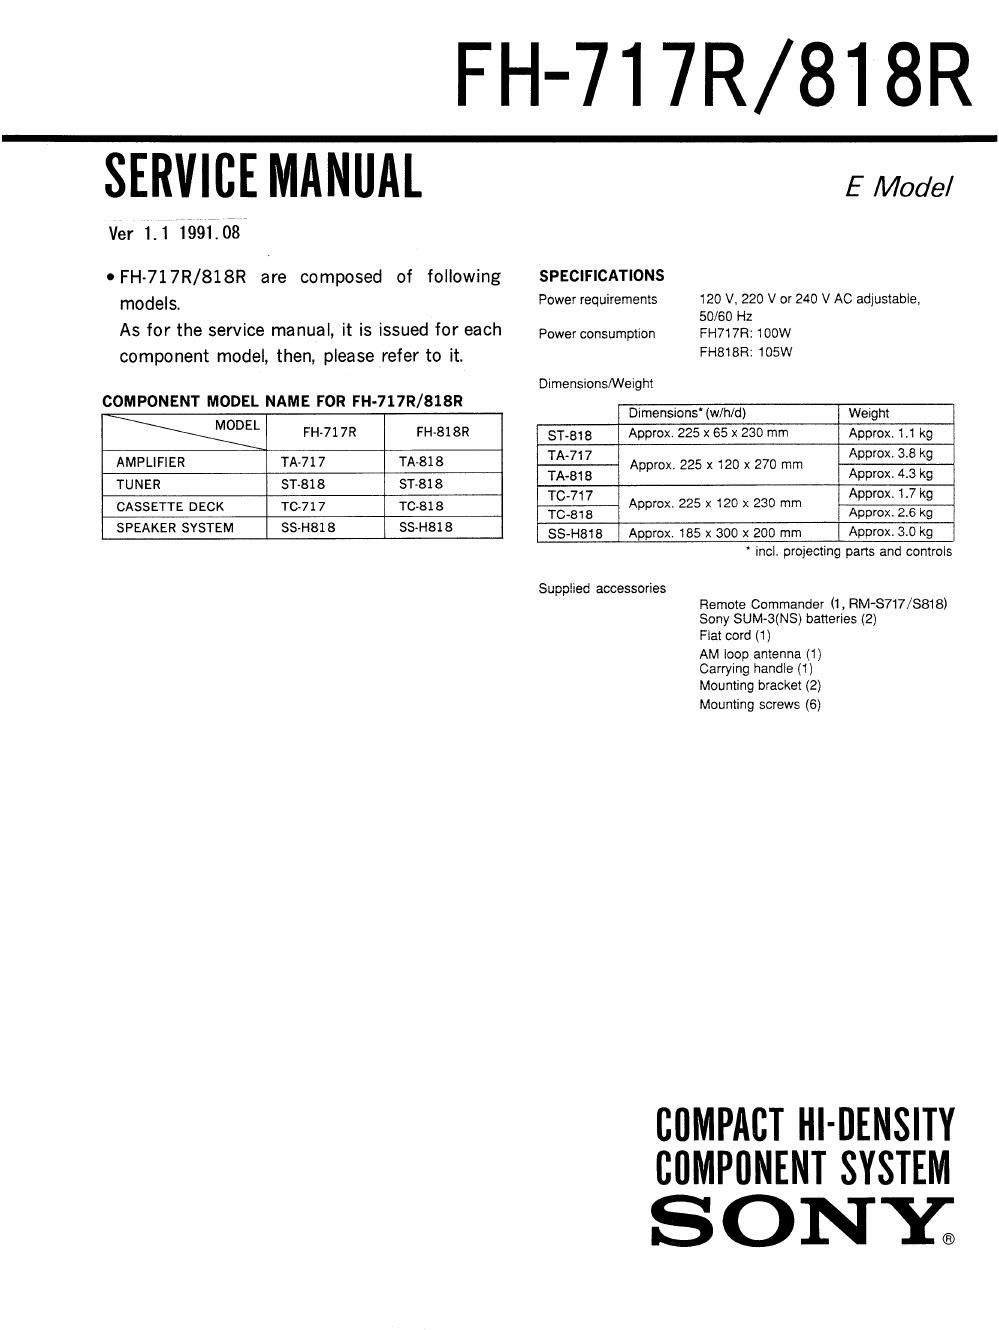 sony fh 717 818 r service manual